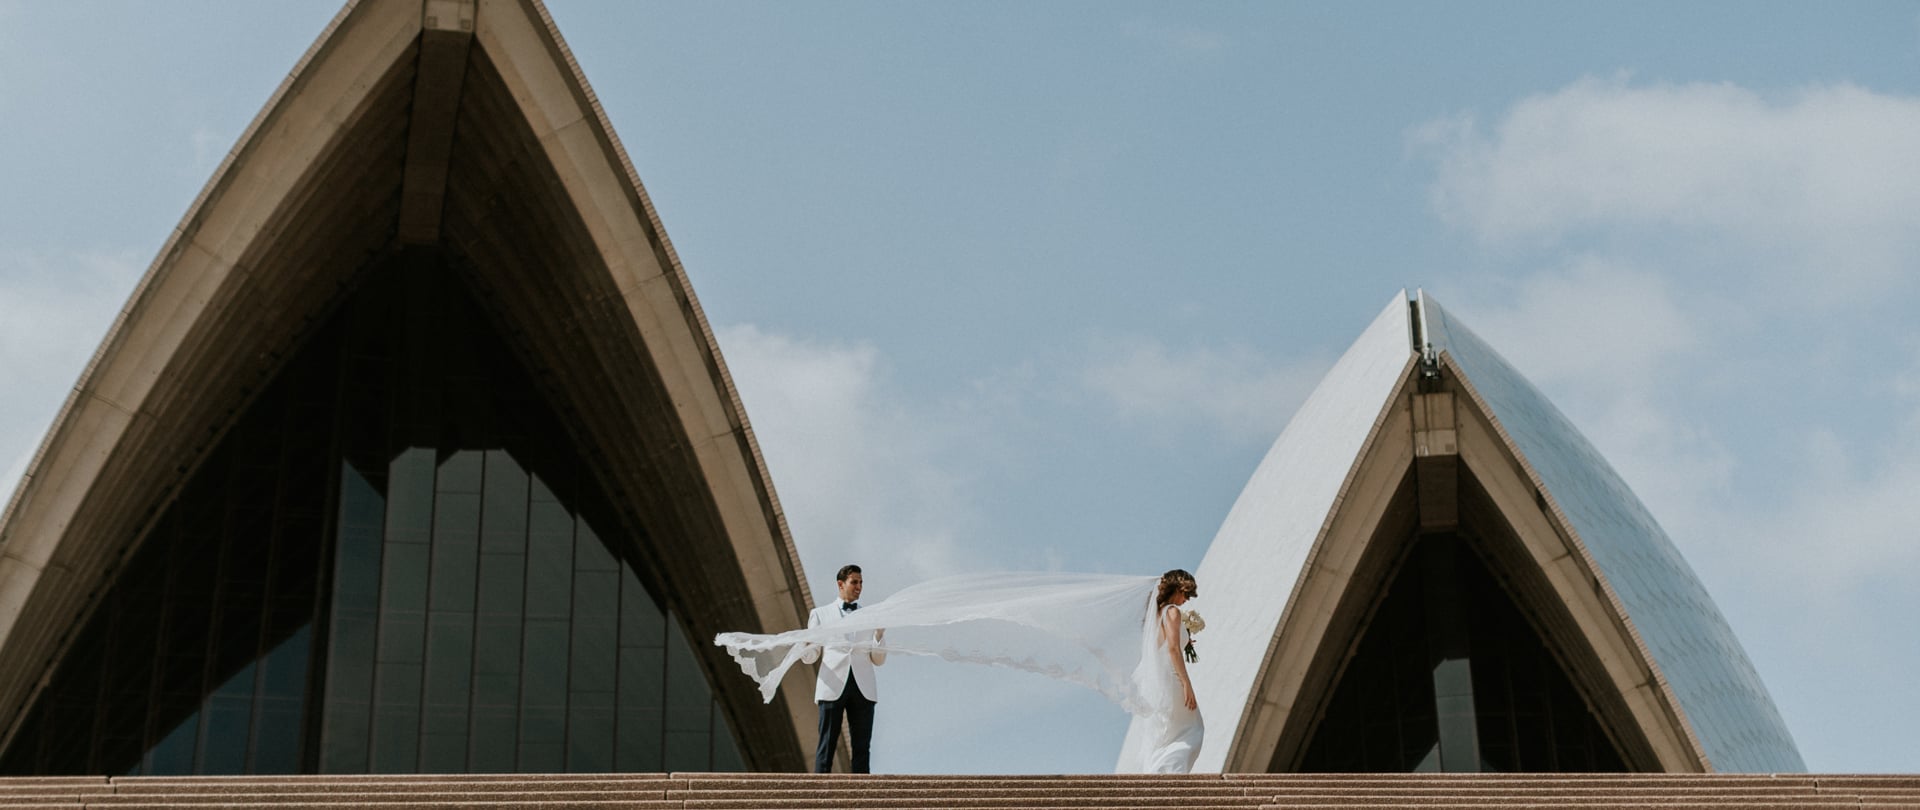 Carla & John Wedding Video Filmed atSydney,New South Wales